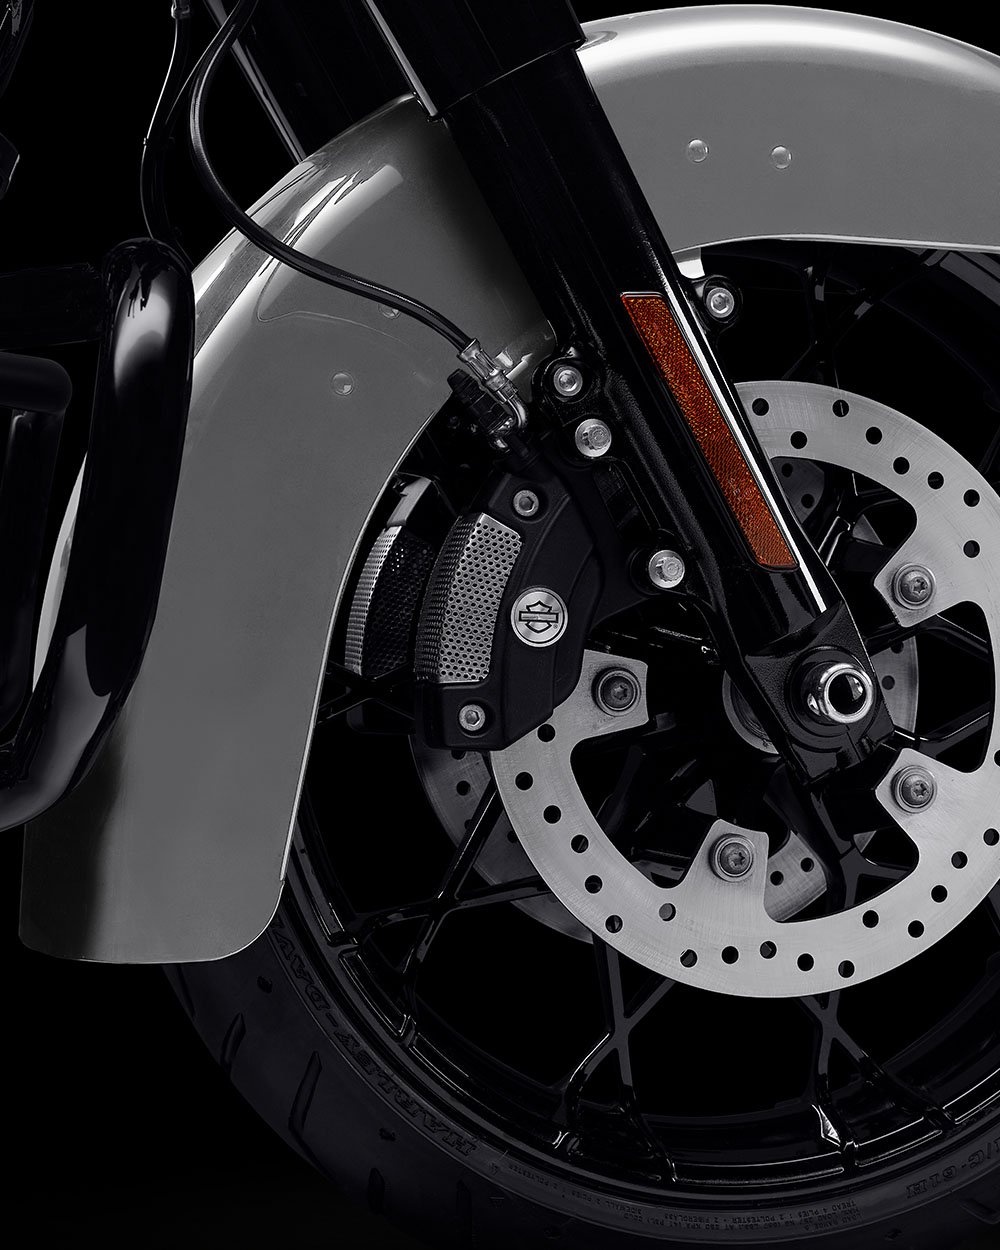 Talon Wheels on a 2022 Street Glide Special motorcycle